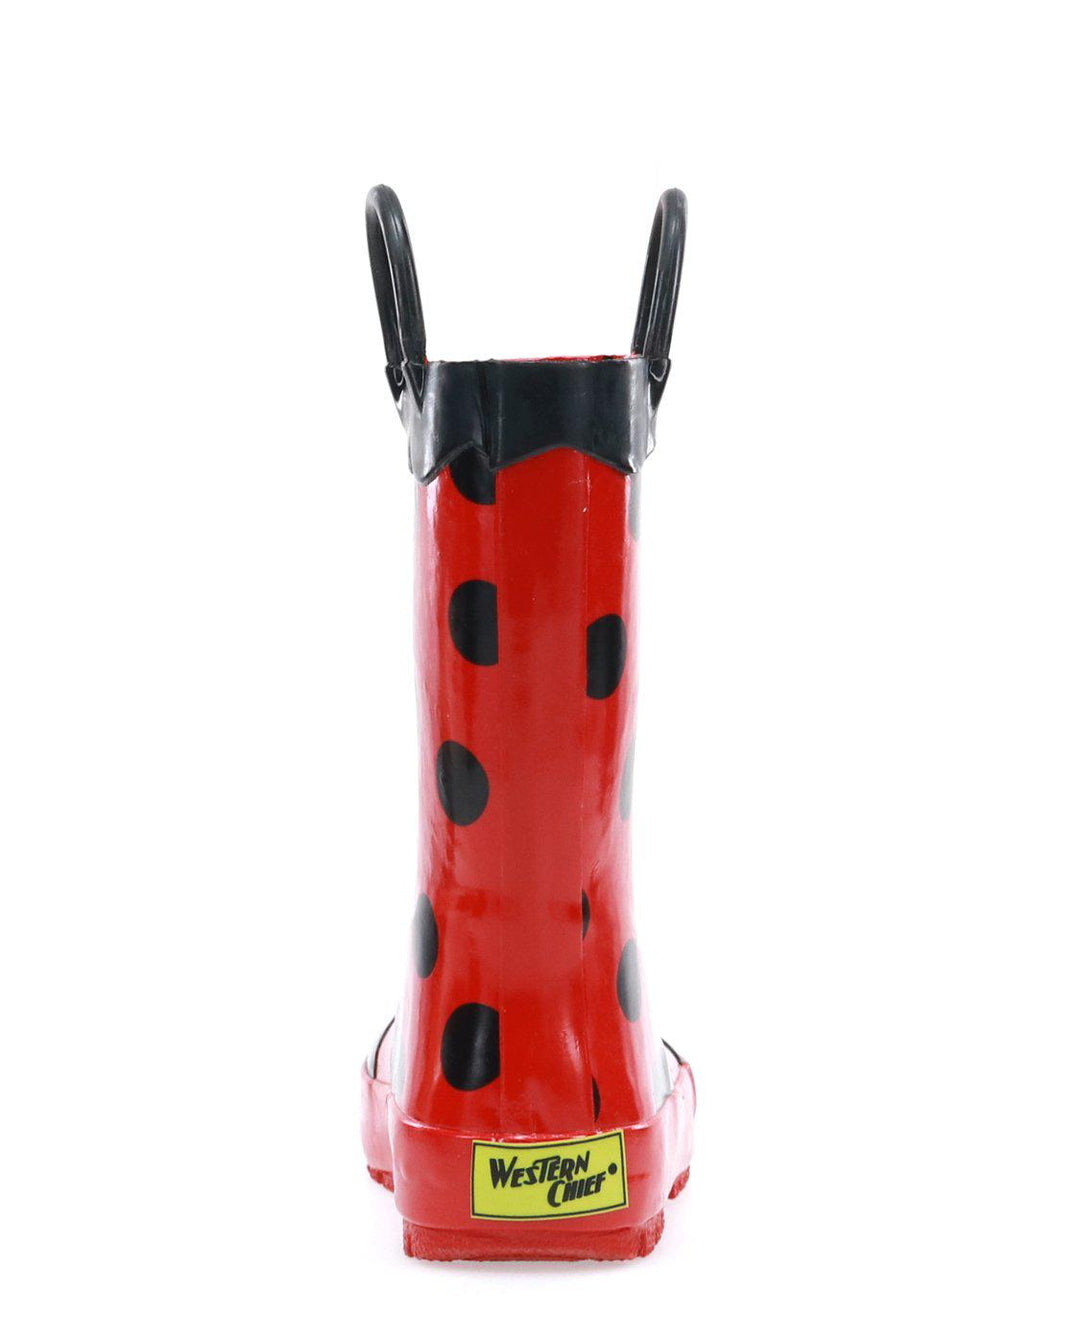 Kids Lucy Ladybug Rain Boot - Red - Western Chief